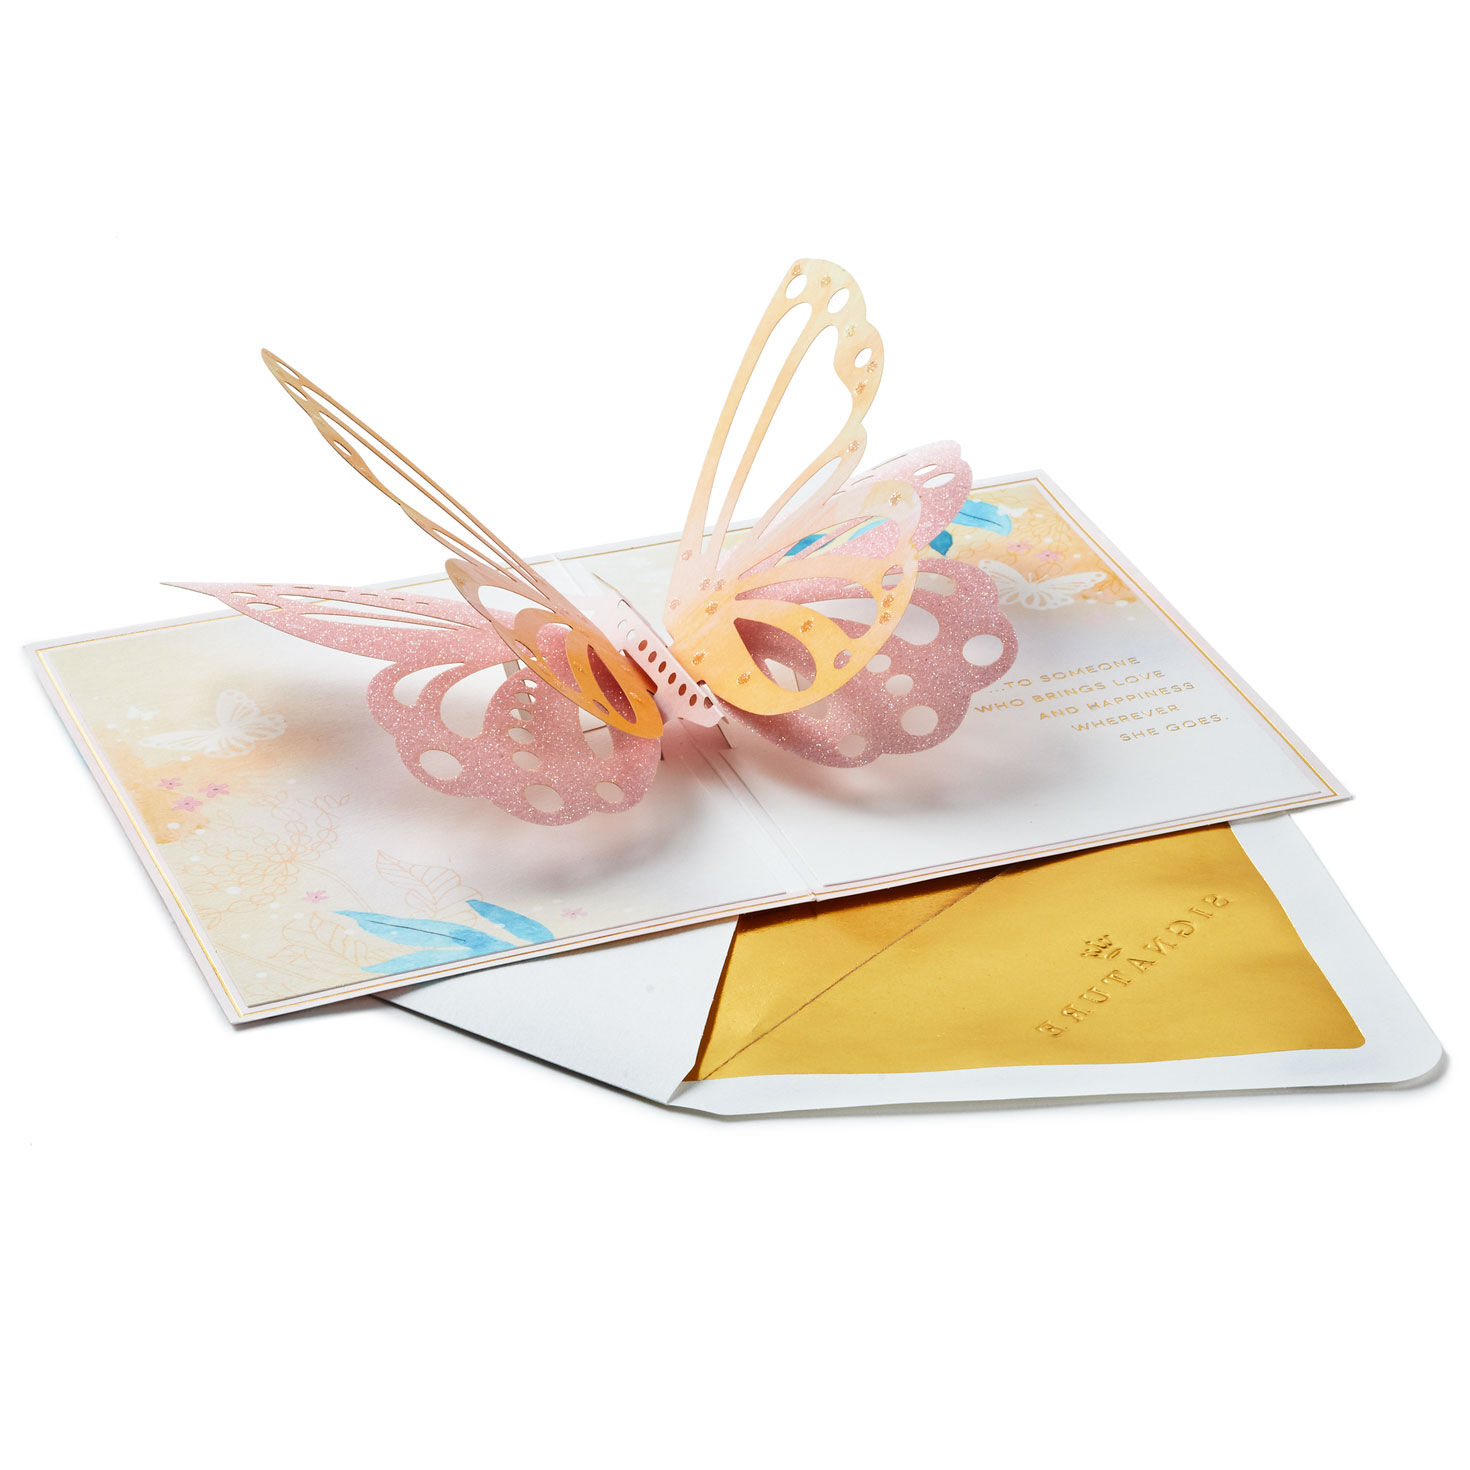 Details about   Hallmark Paper Wonder Pop-Up Mother’s Day Card With Envelope 